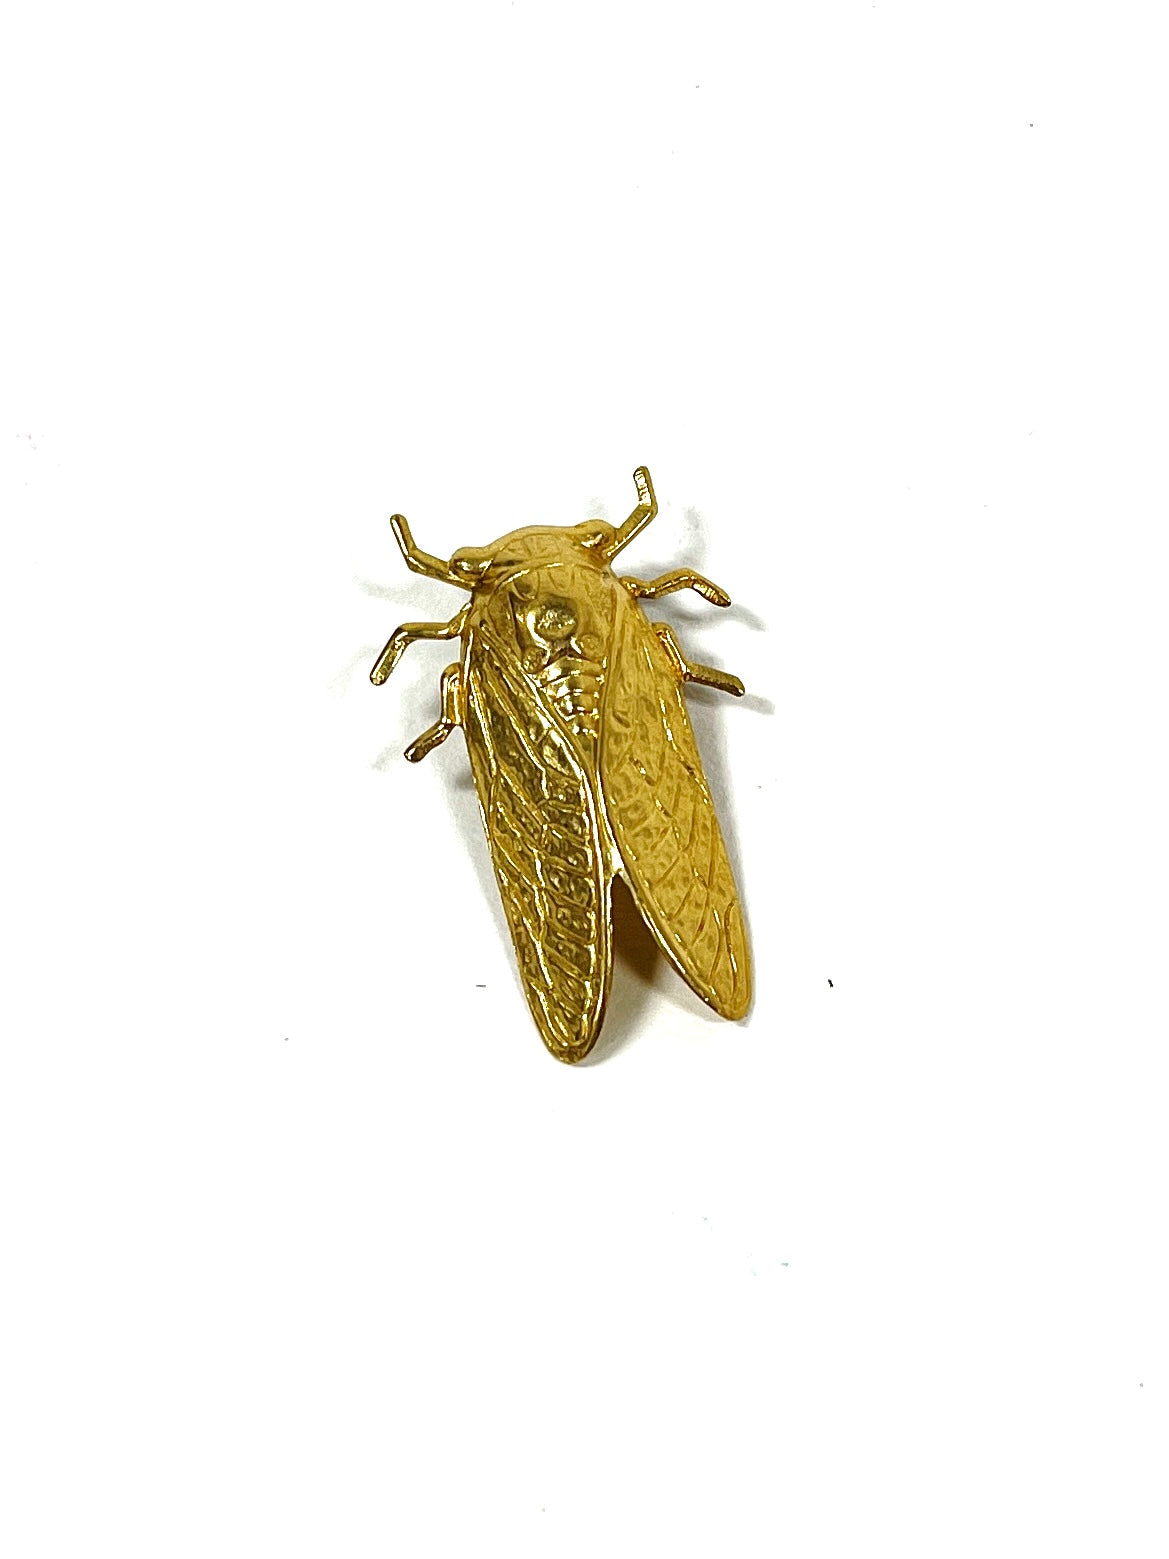 Brass Jewelry - cicada pin